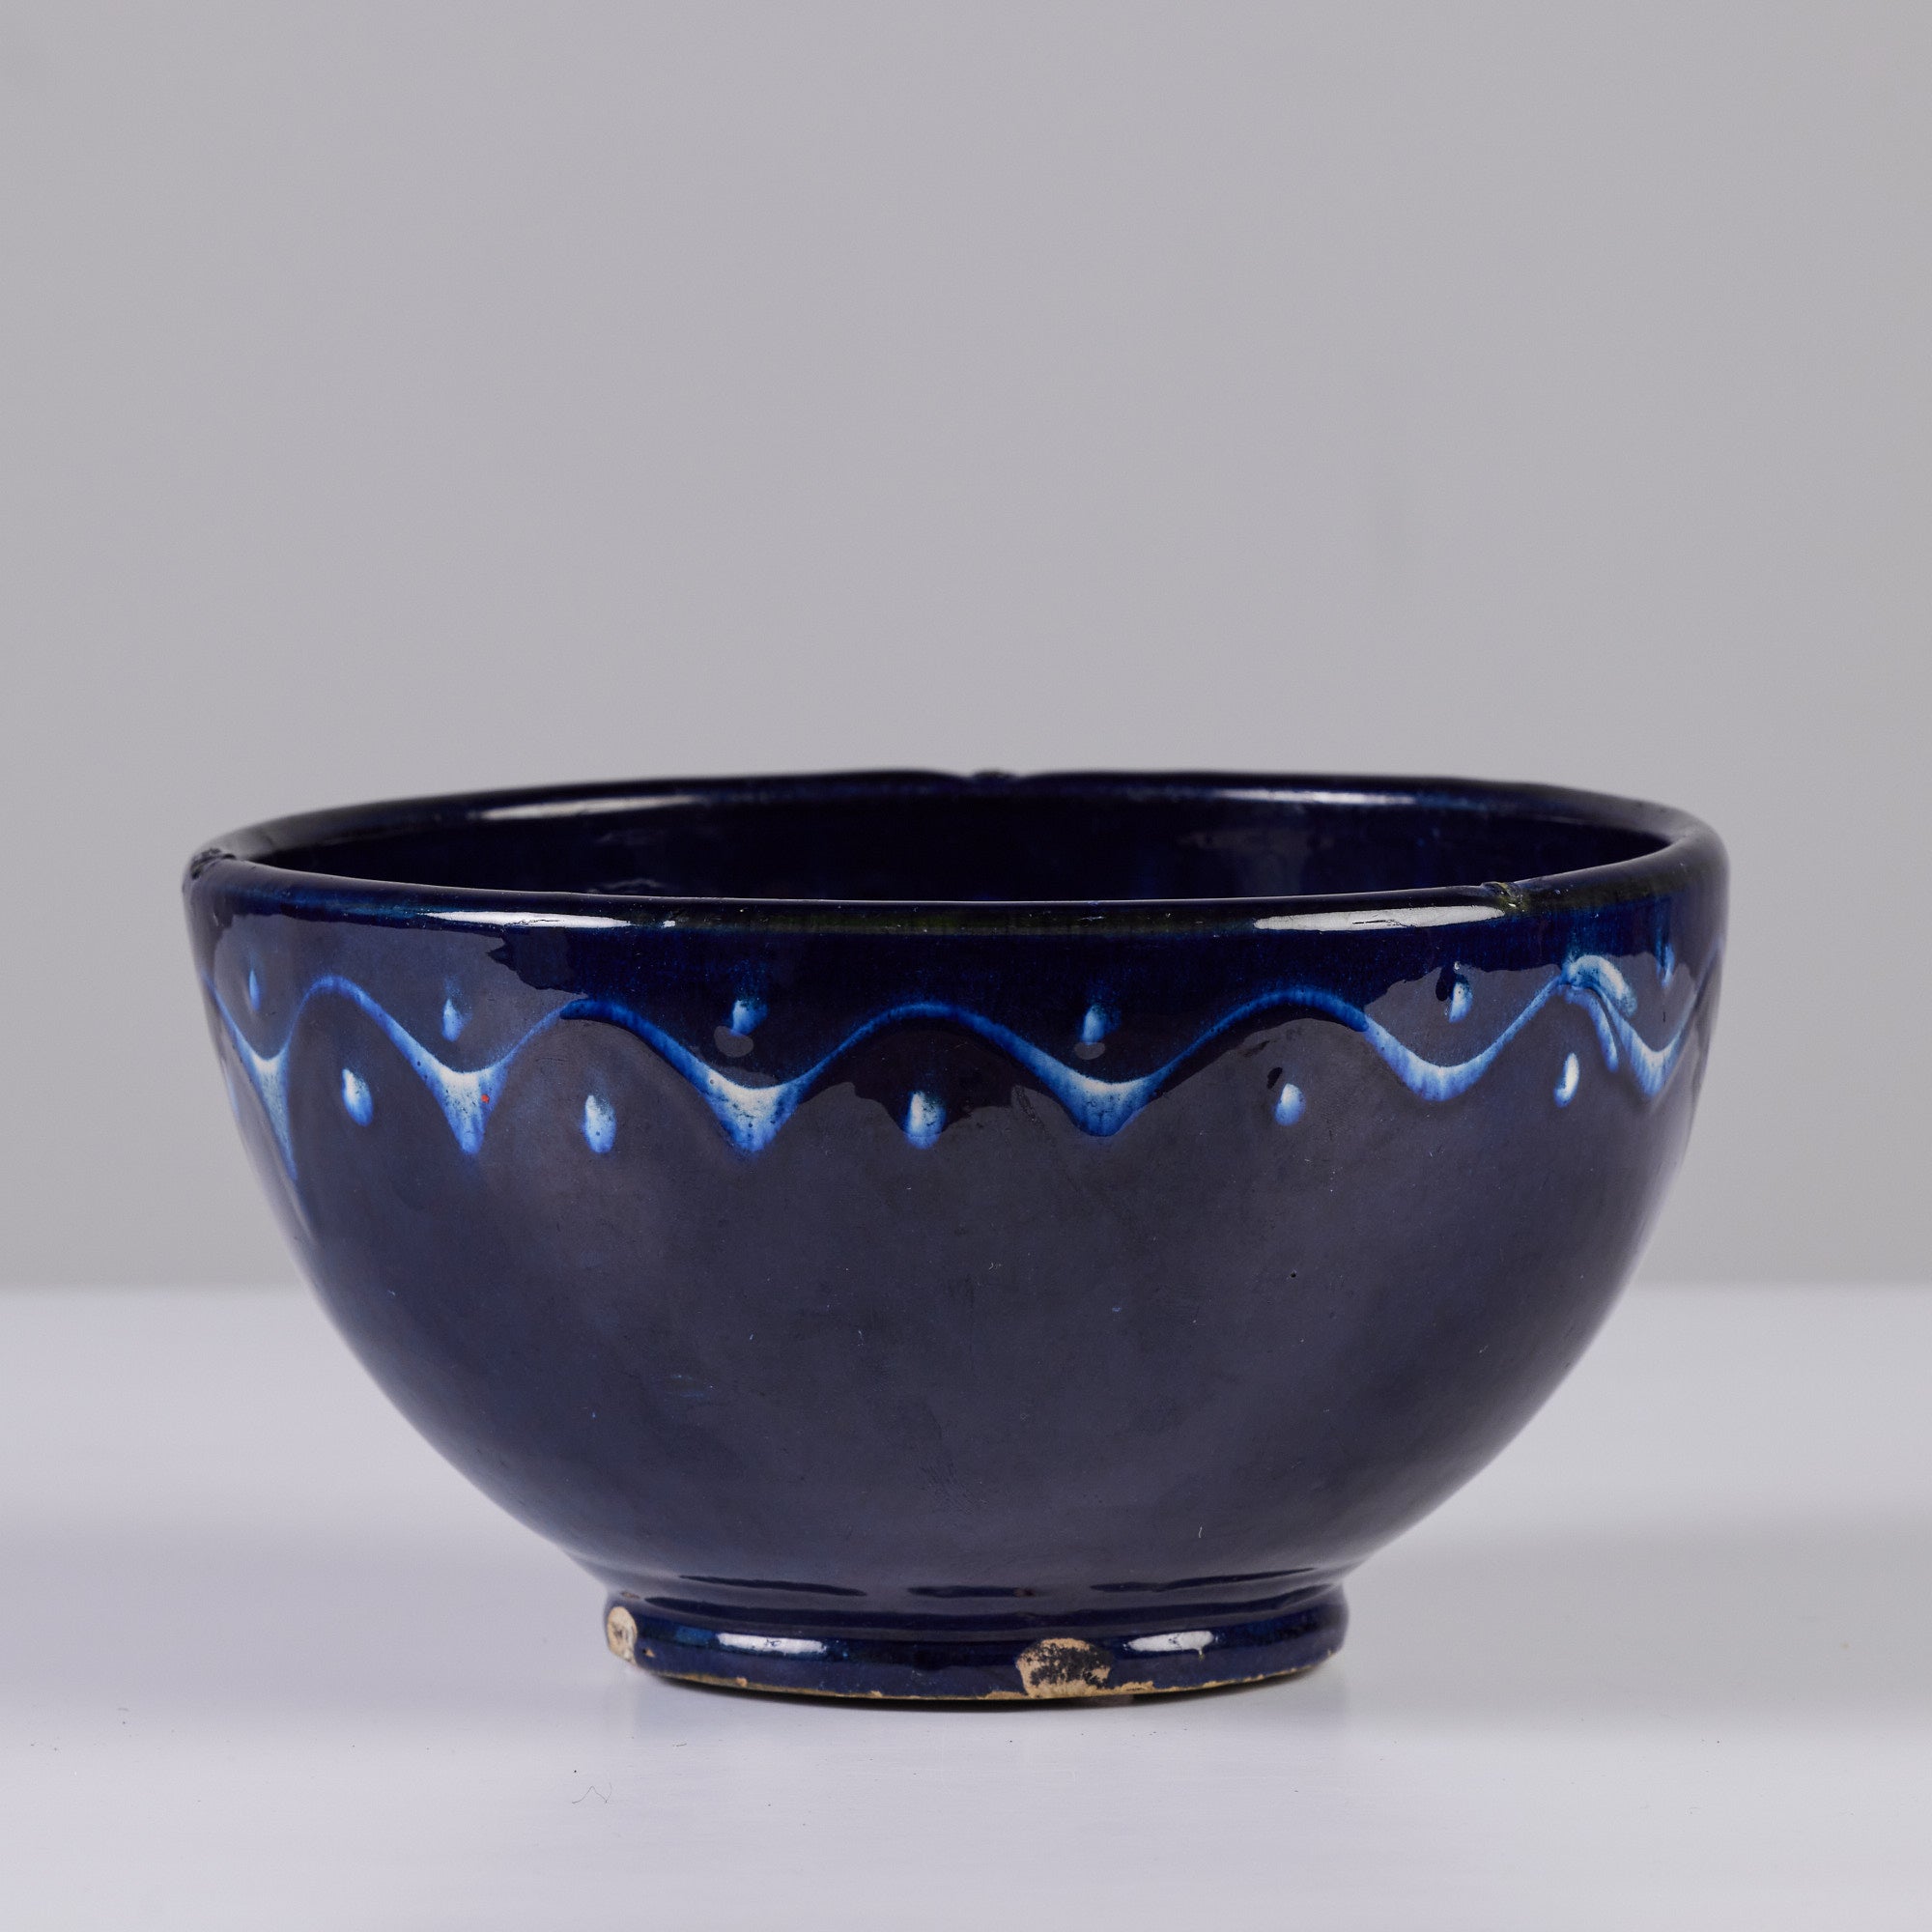 Ceramic Bowl from the Studio of Herman August Kähler